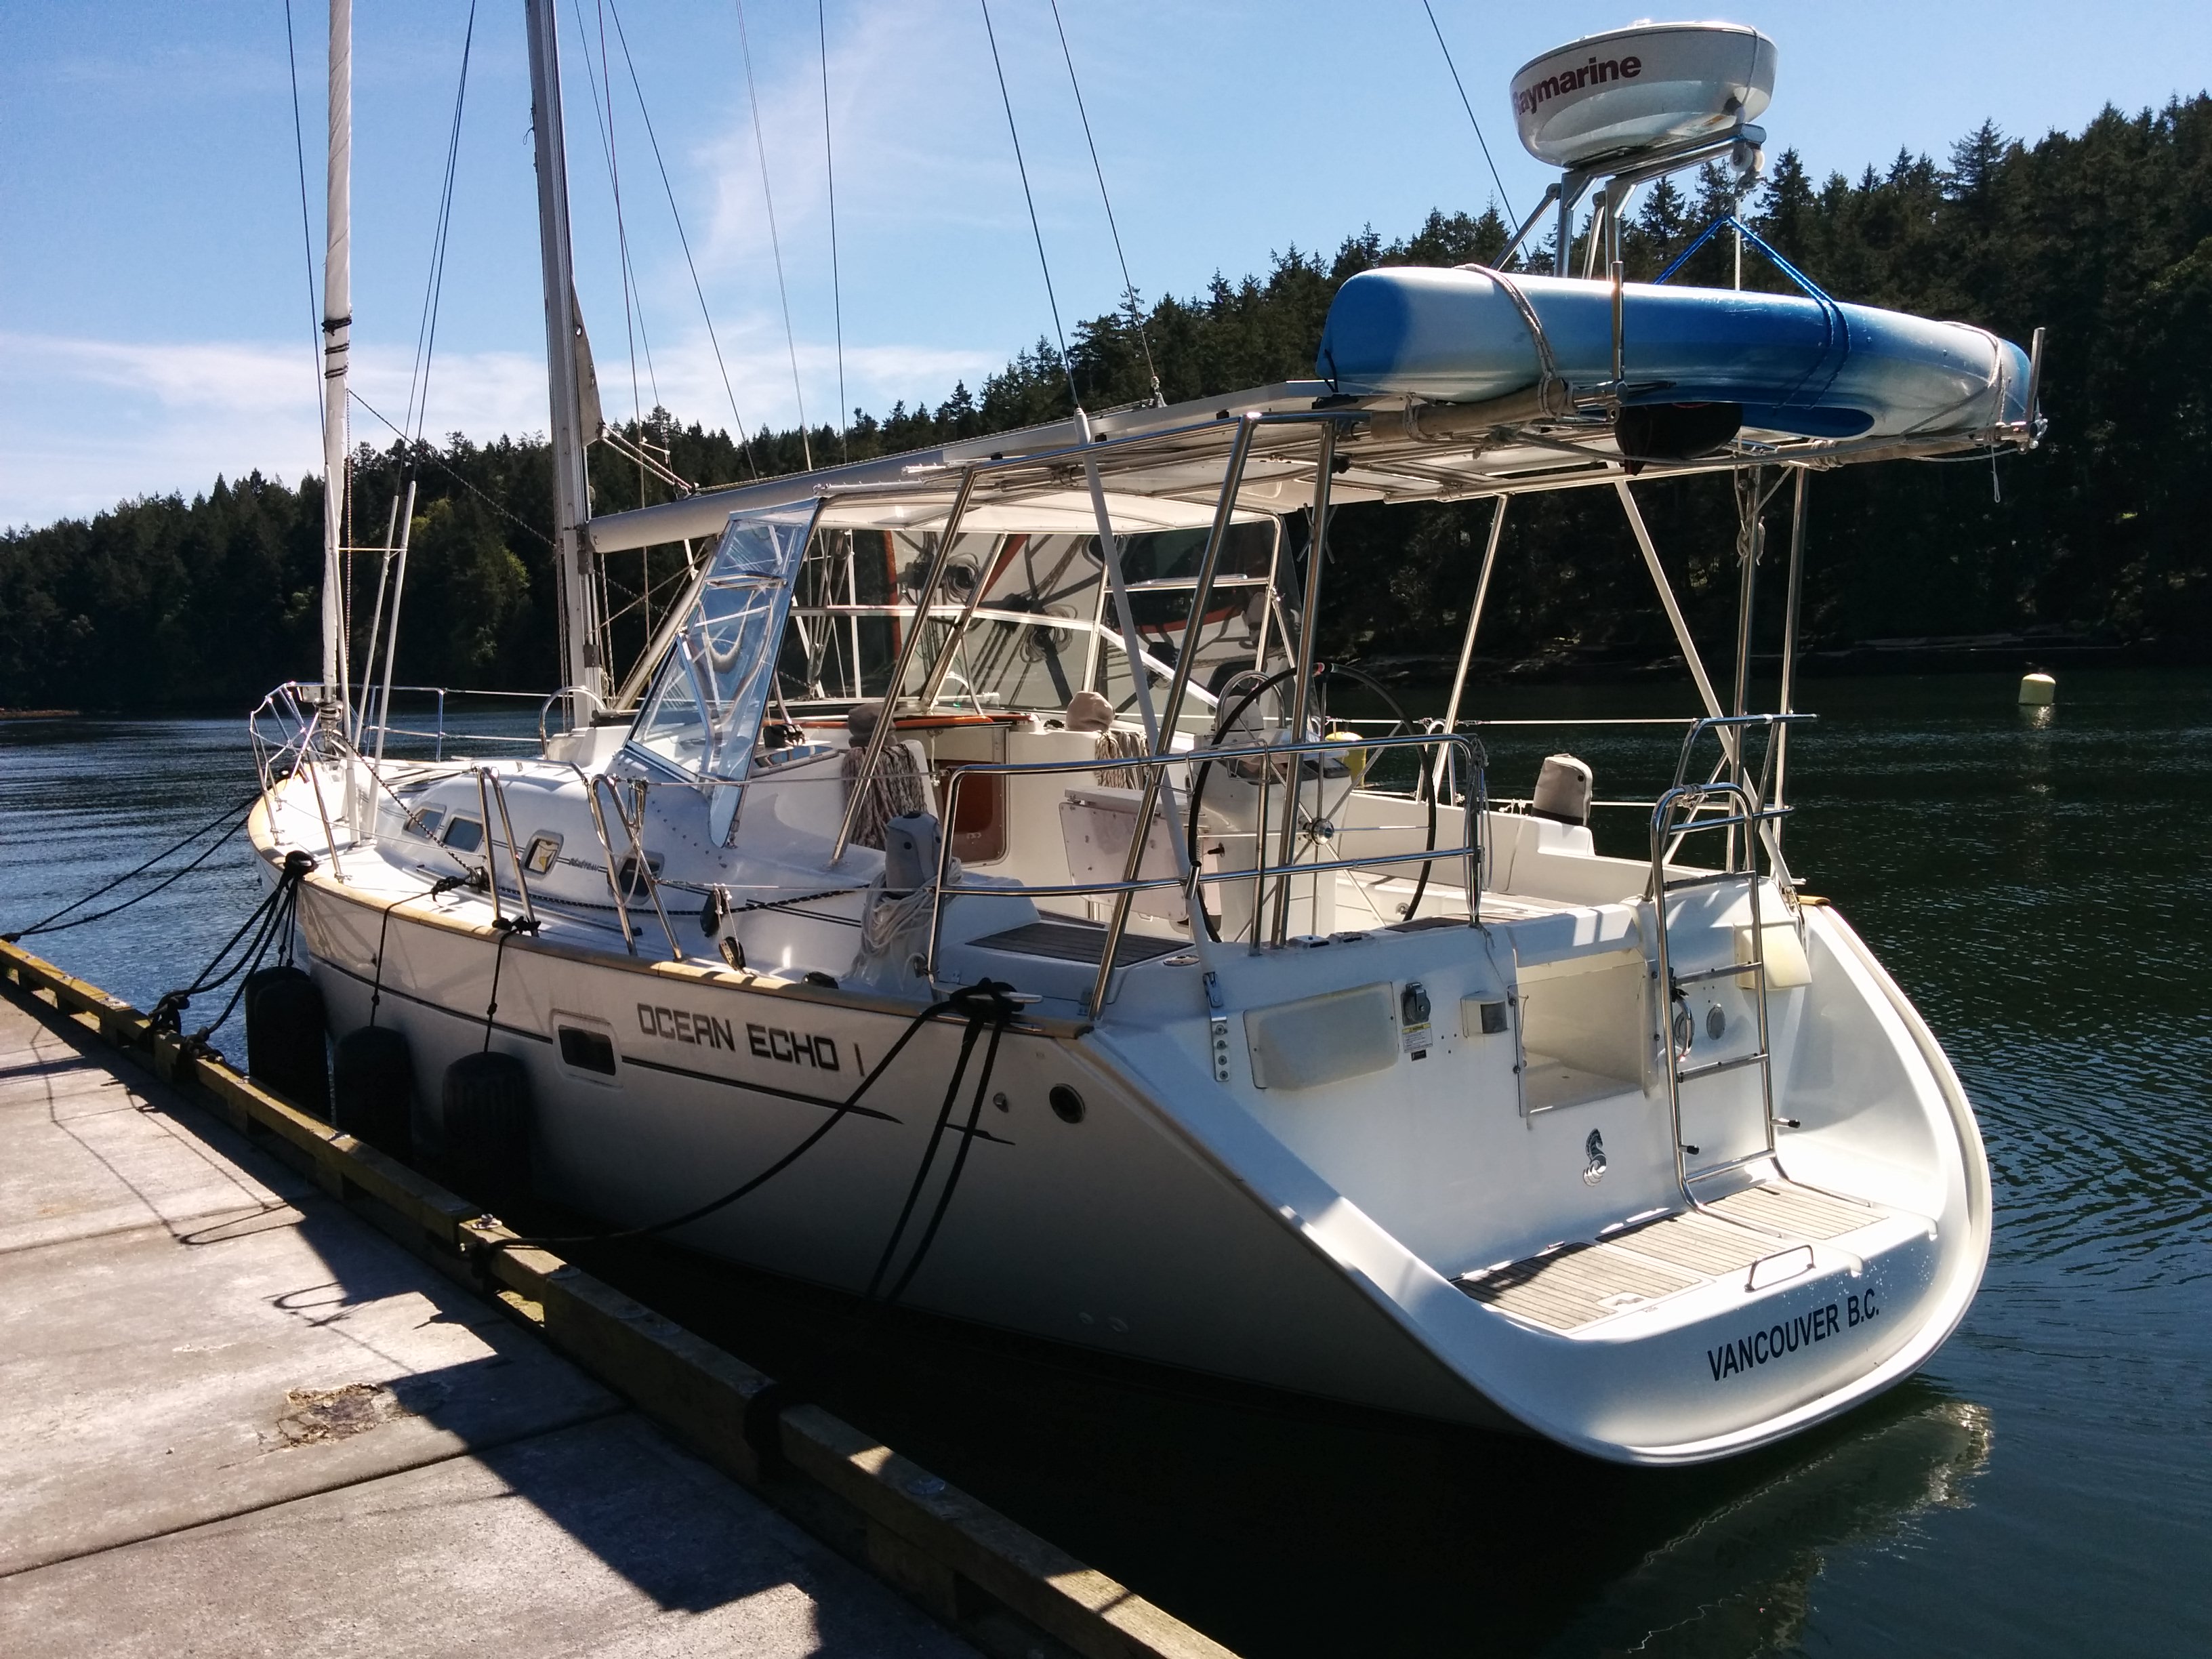 2007 Beneteau 423 Sailboat for sale in British Columbia, Canada - image 5 